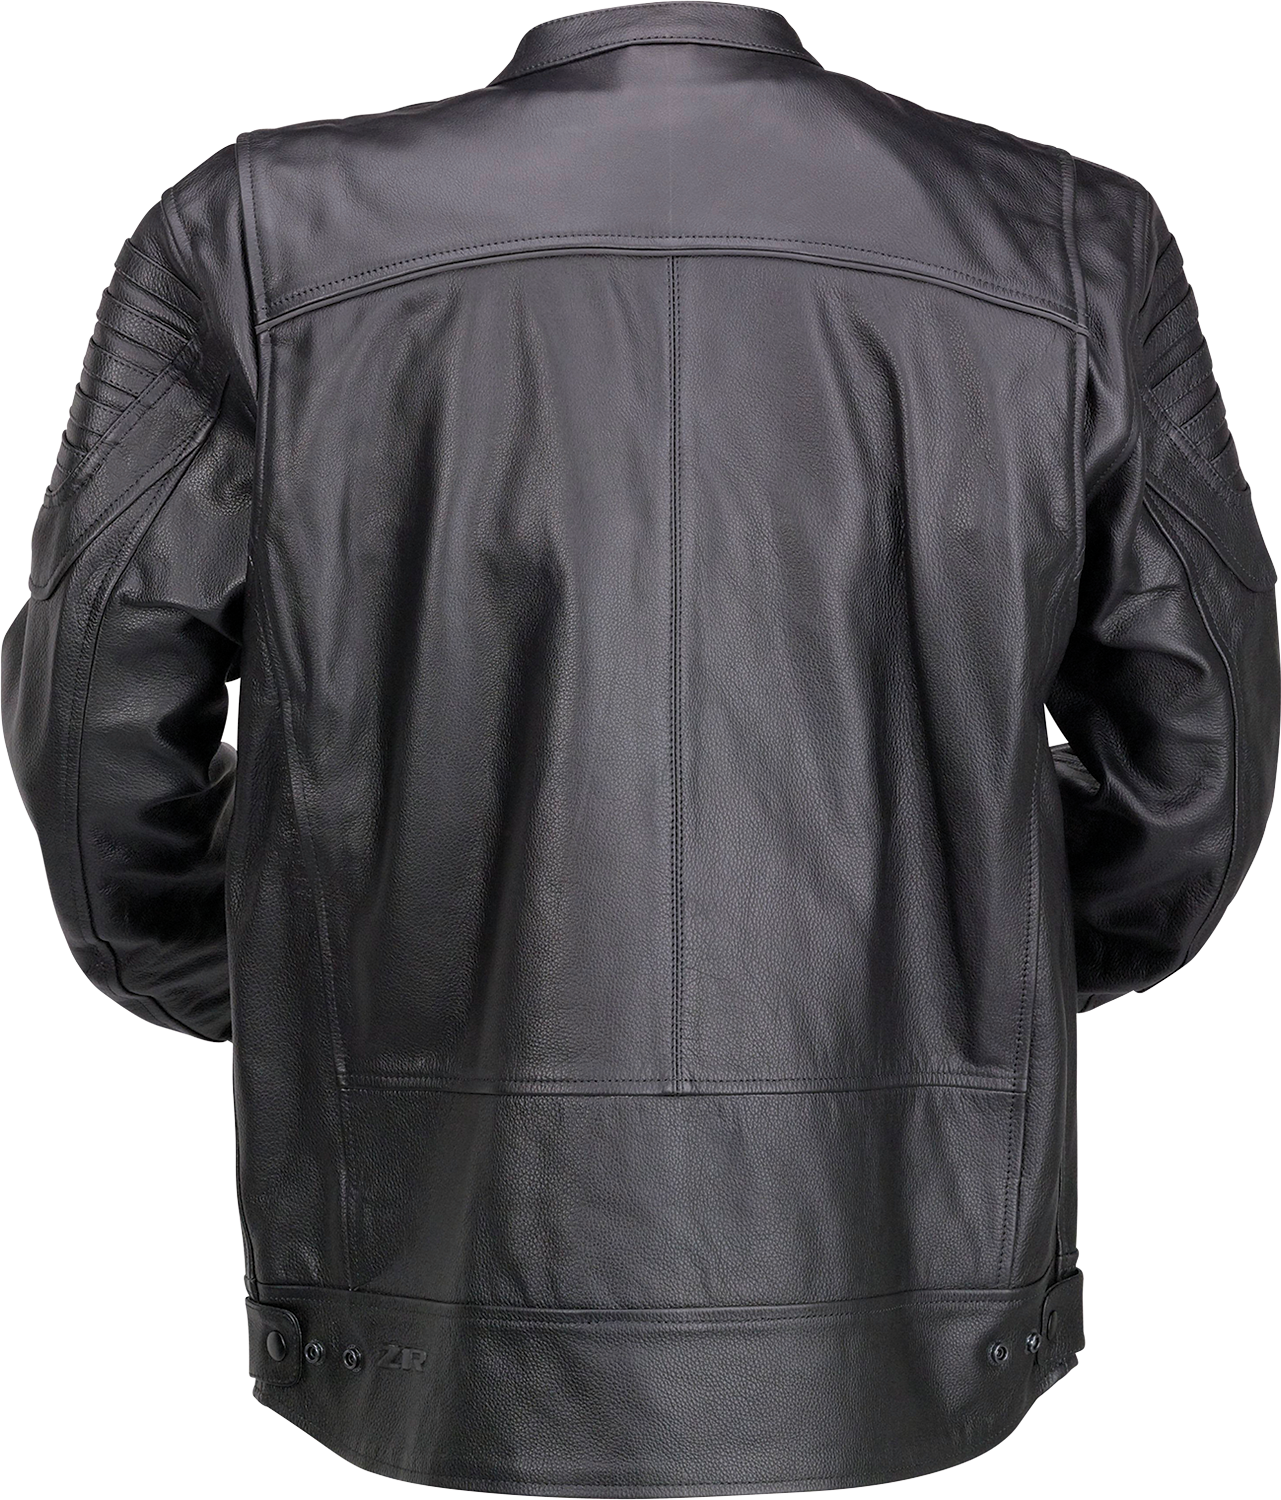 Z1R Widower Leather Jacket - Black - Small 2810-3969